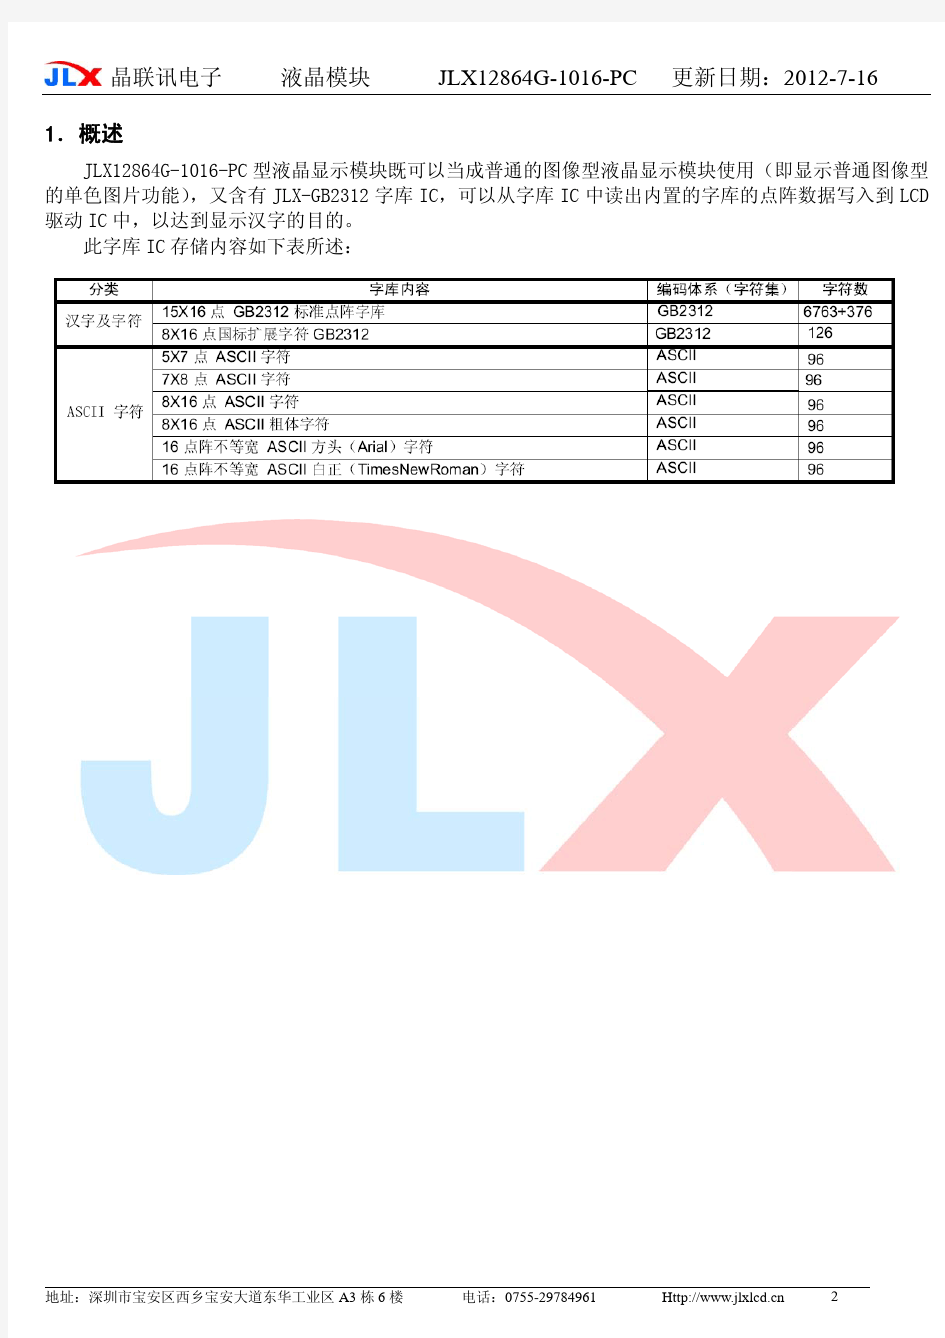 JLX12864G-1016-PC的中文字库编程说明书